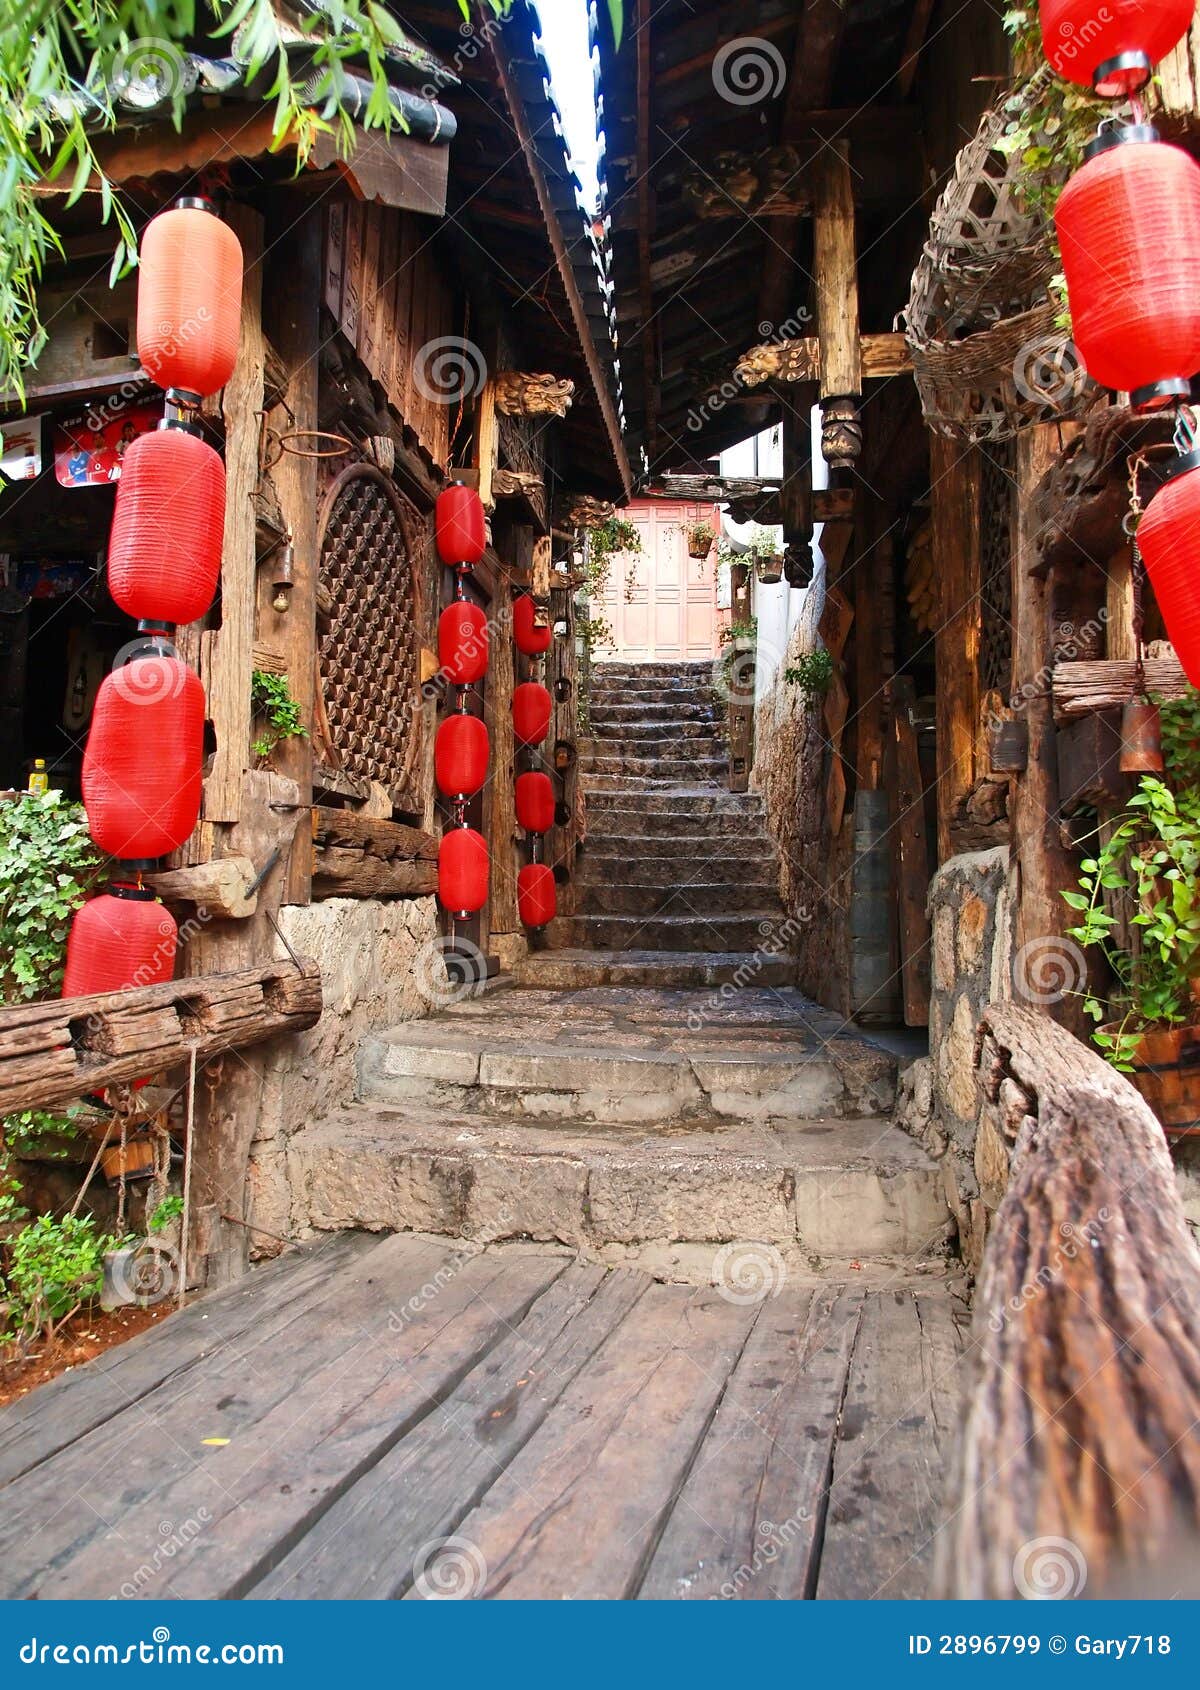 a historical town - lijiang